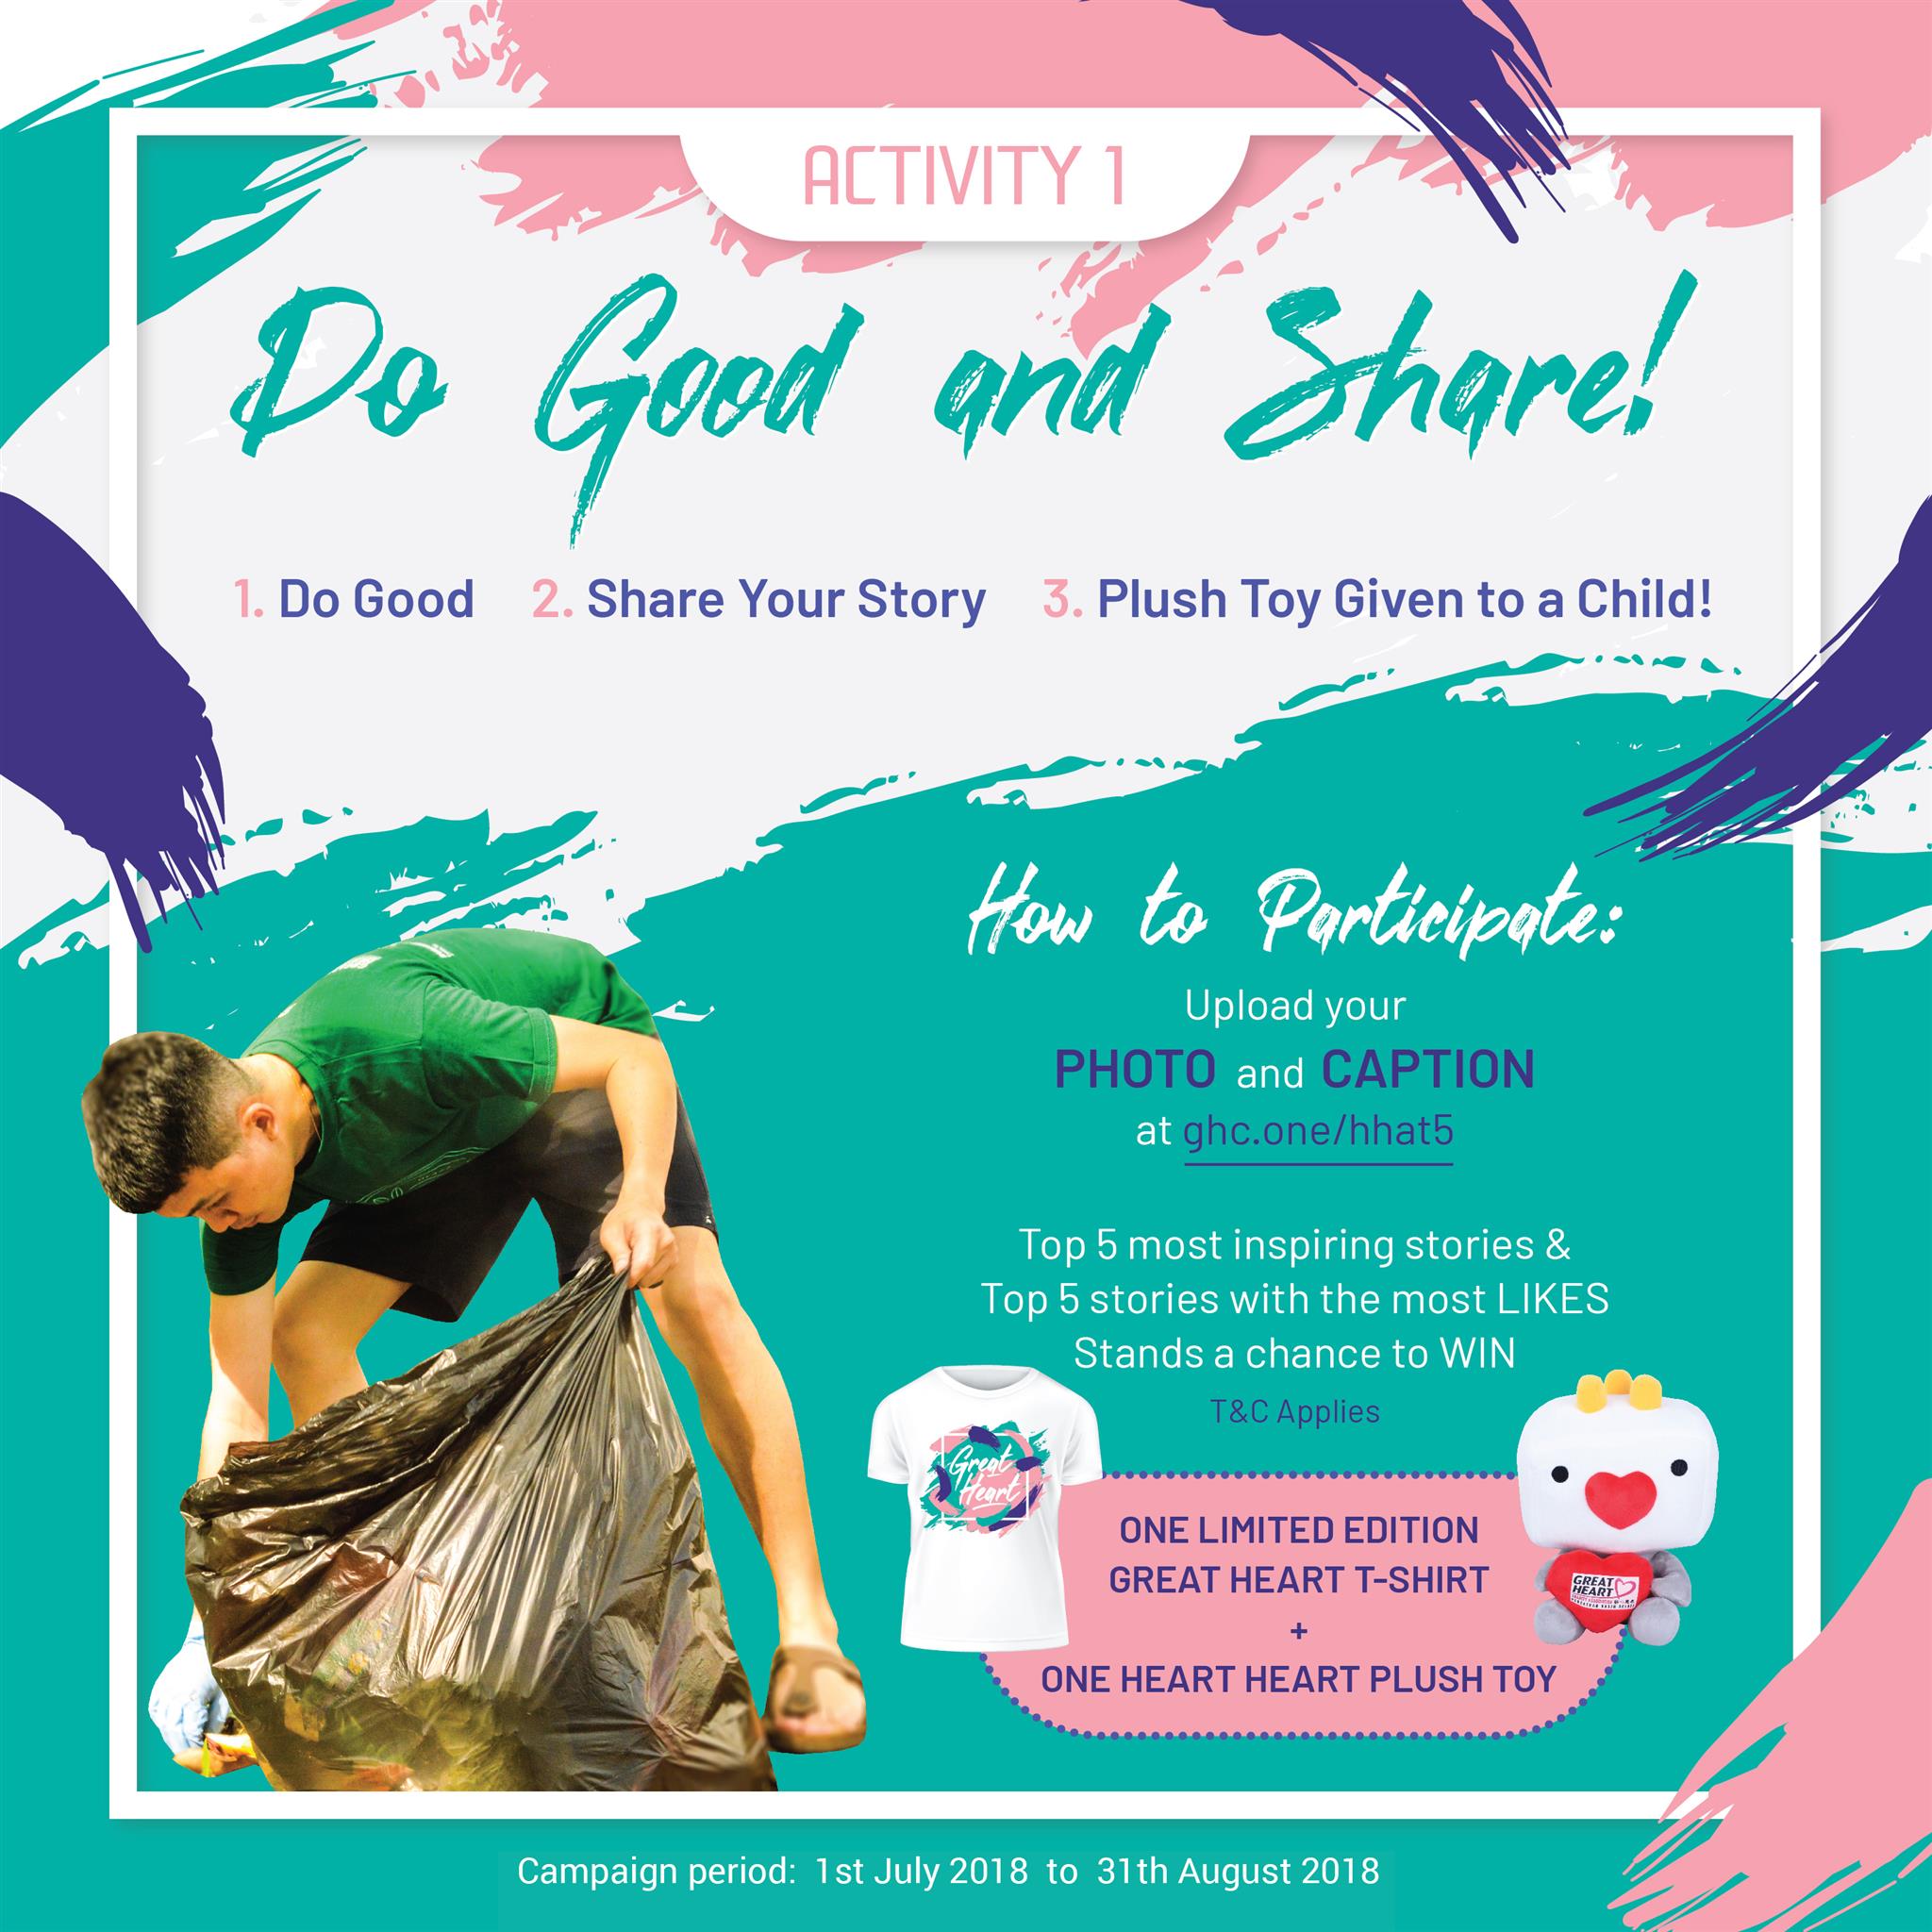 Heart Heart Thrive @ 5 - Activity 1: Do Good and Share now!